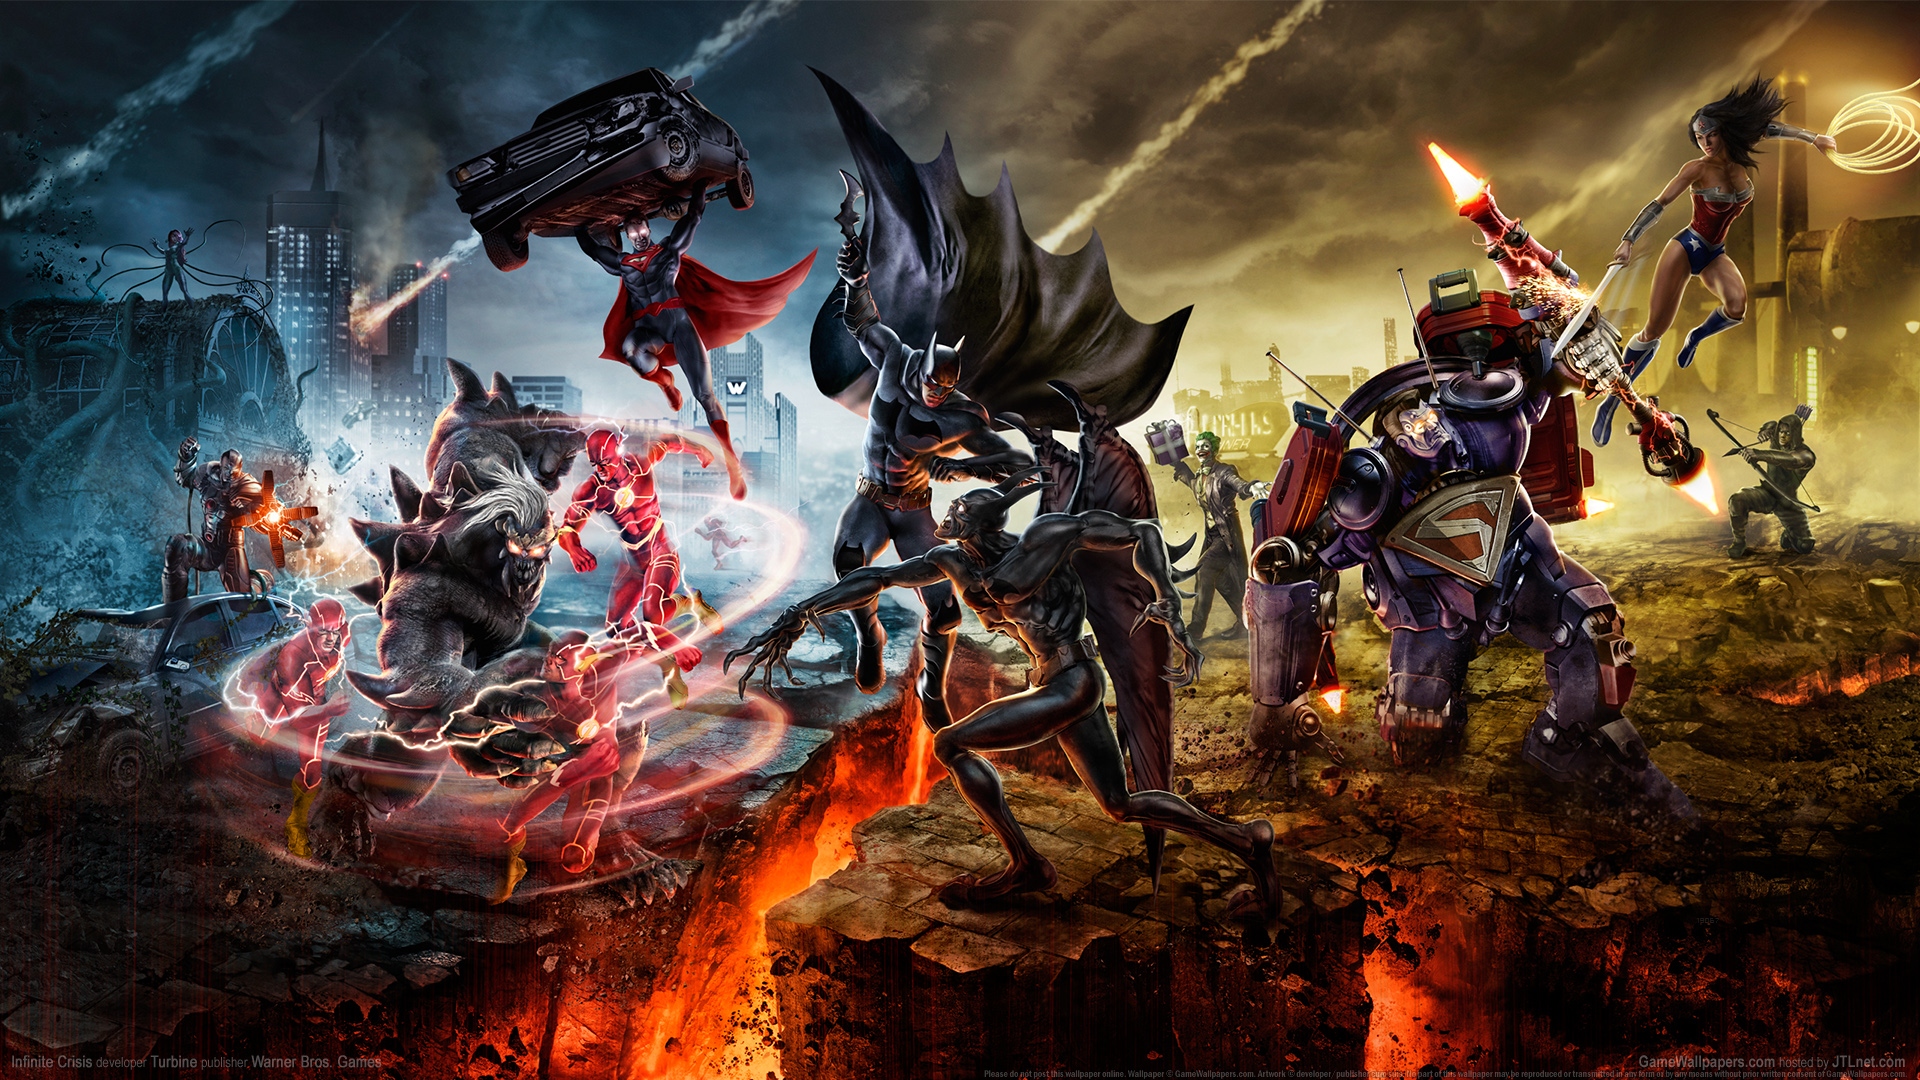 Video Game Infinite Crisis HD Wallpaper | Background Image